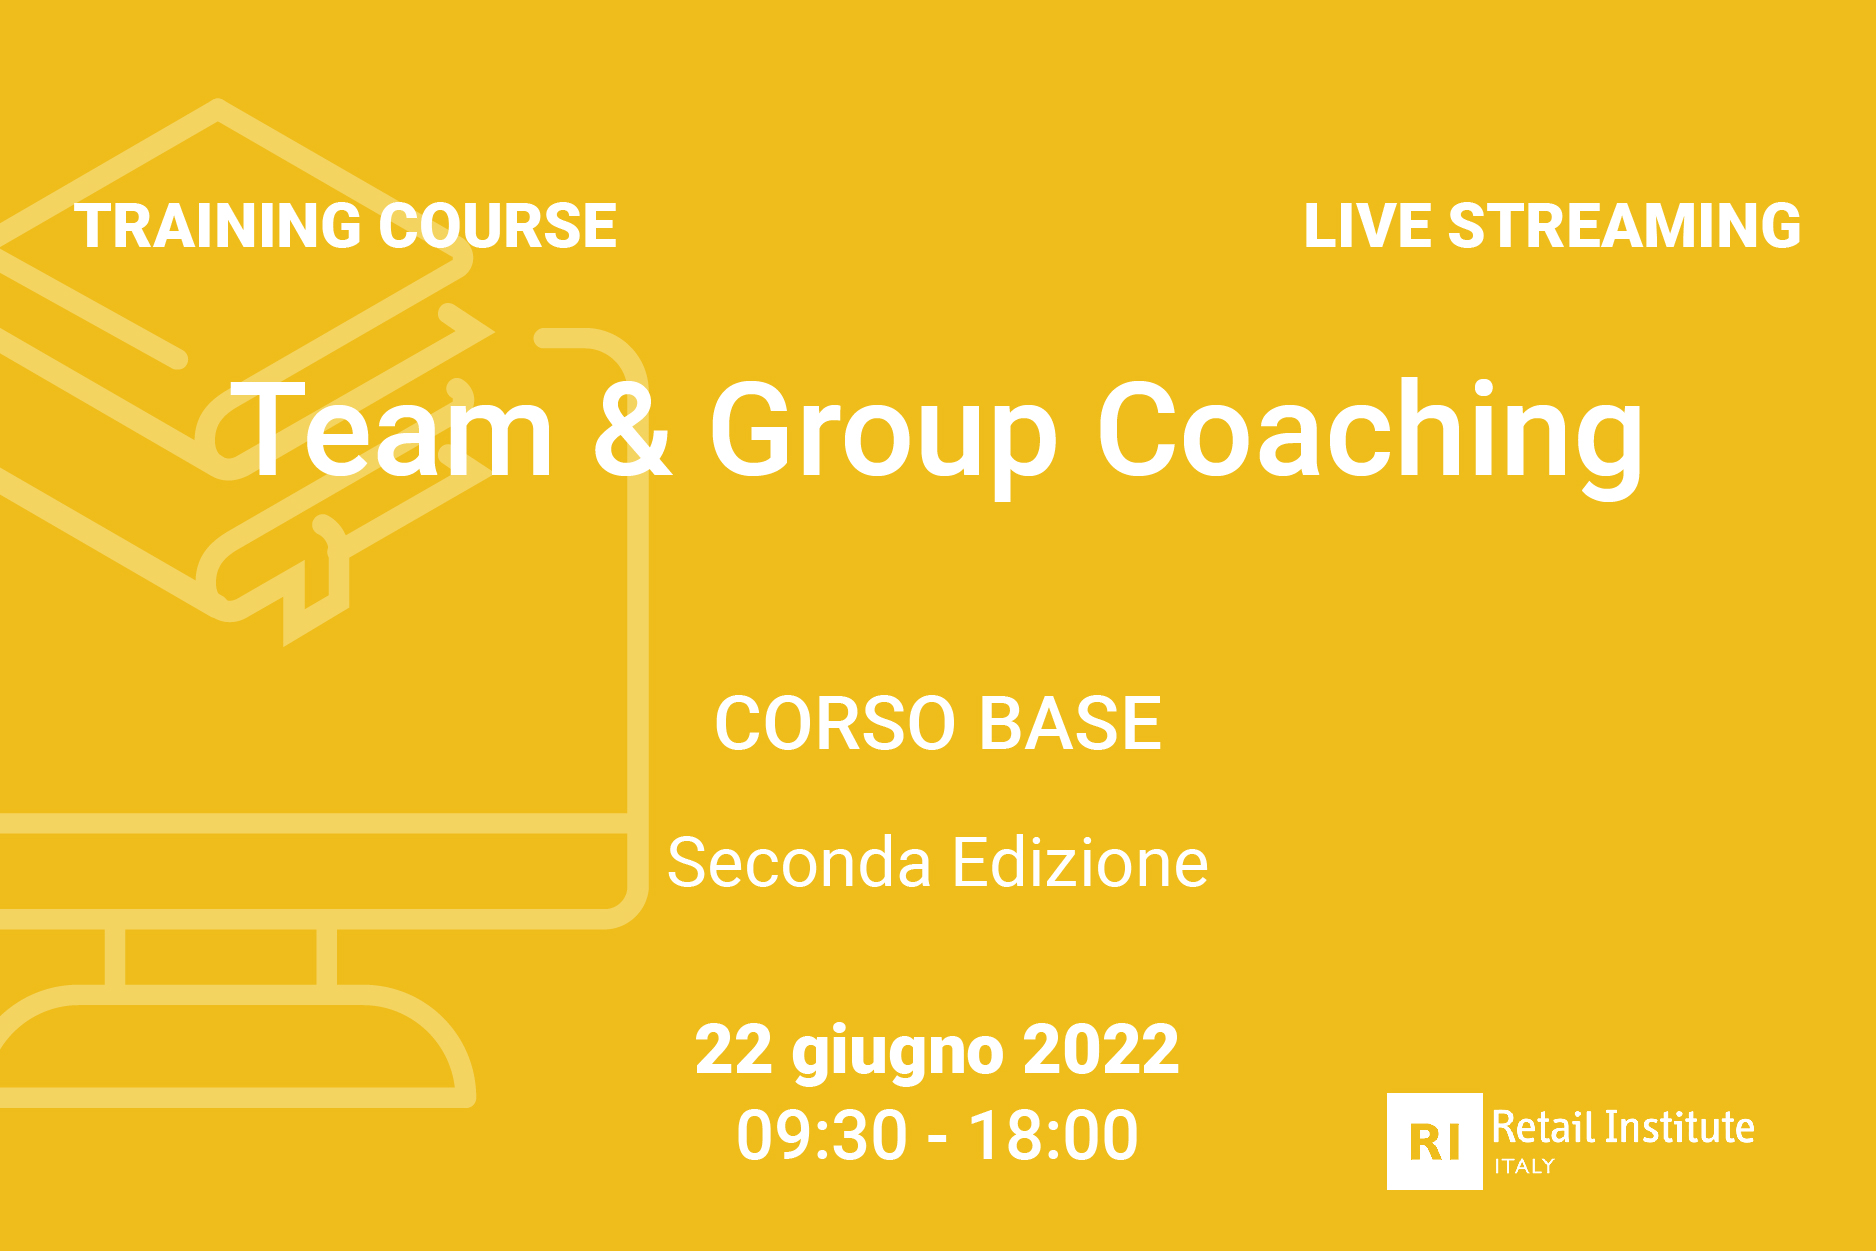 Training Course “Team & Group Coaching” – BASE – 22 giugno 2022